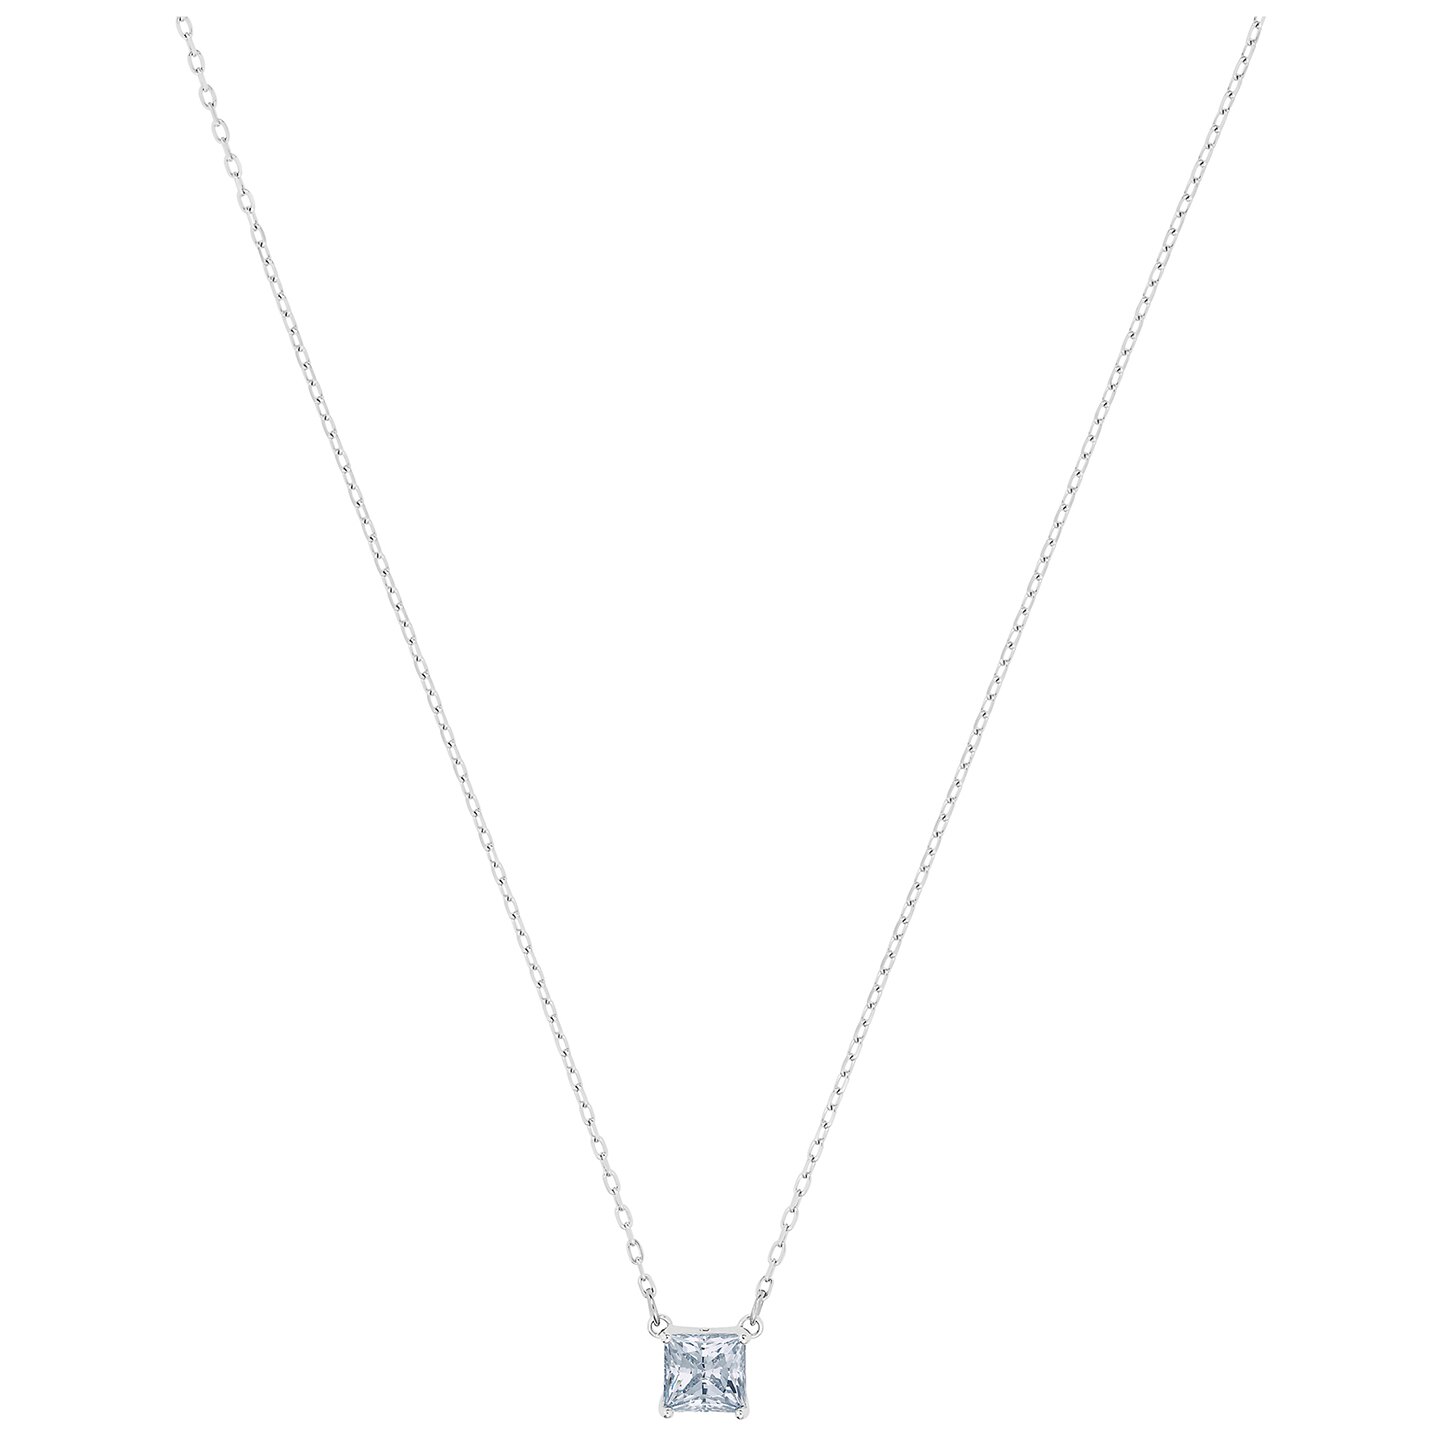 Swarovski Attract Necklace - White - Rhodium Plated - 5510696